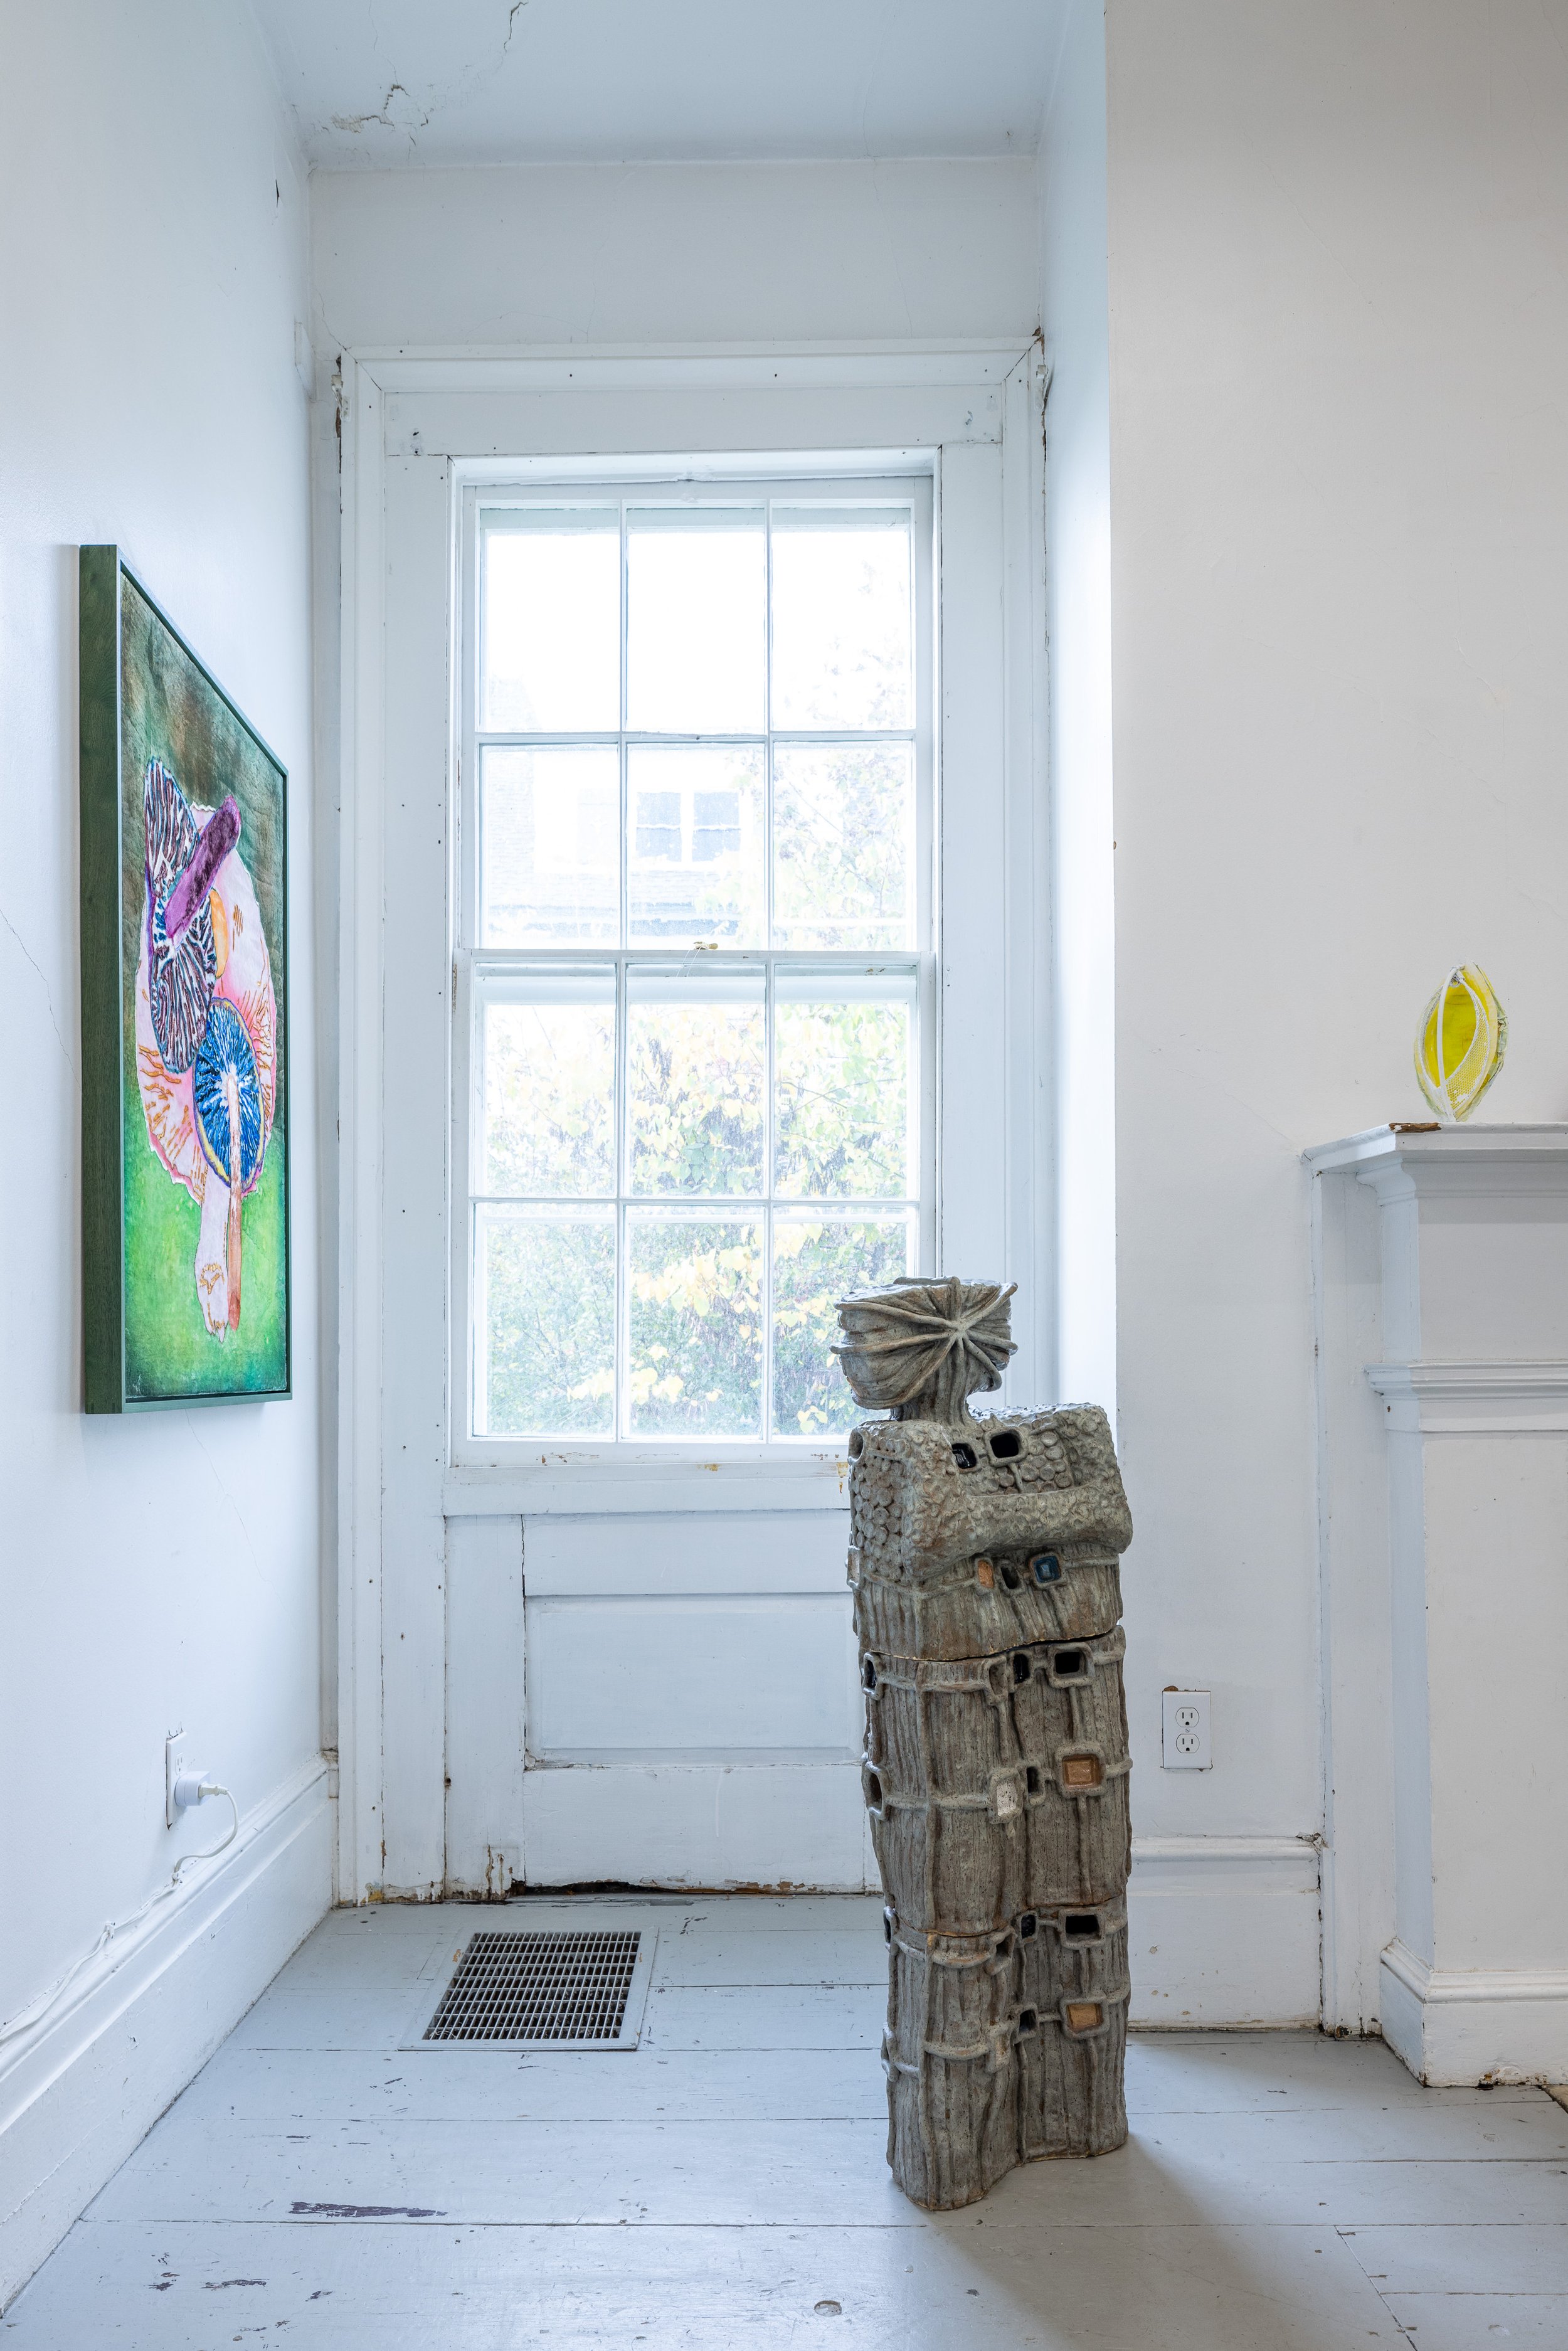 (center) Elisa Soliven, Aster Body Totem, 2021, glazed ceramic, 42 x 15 x 12 inches